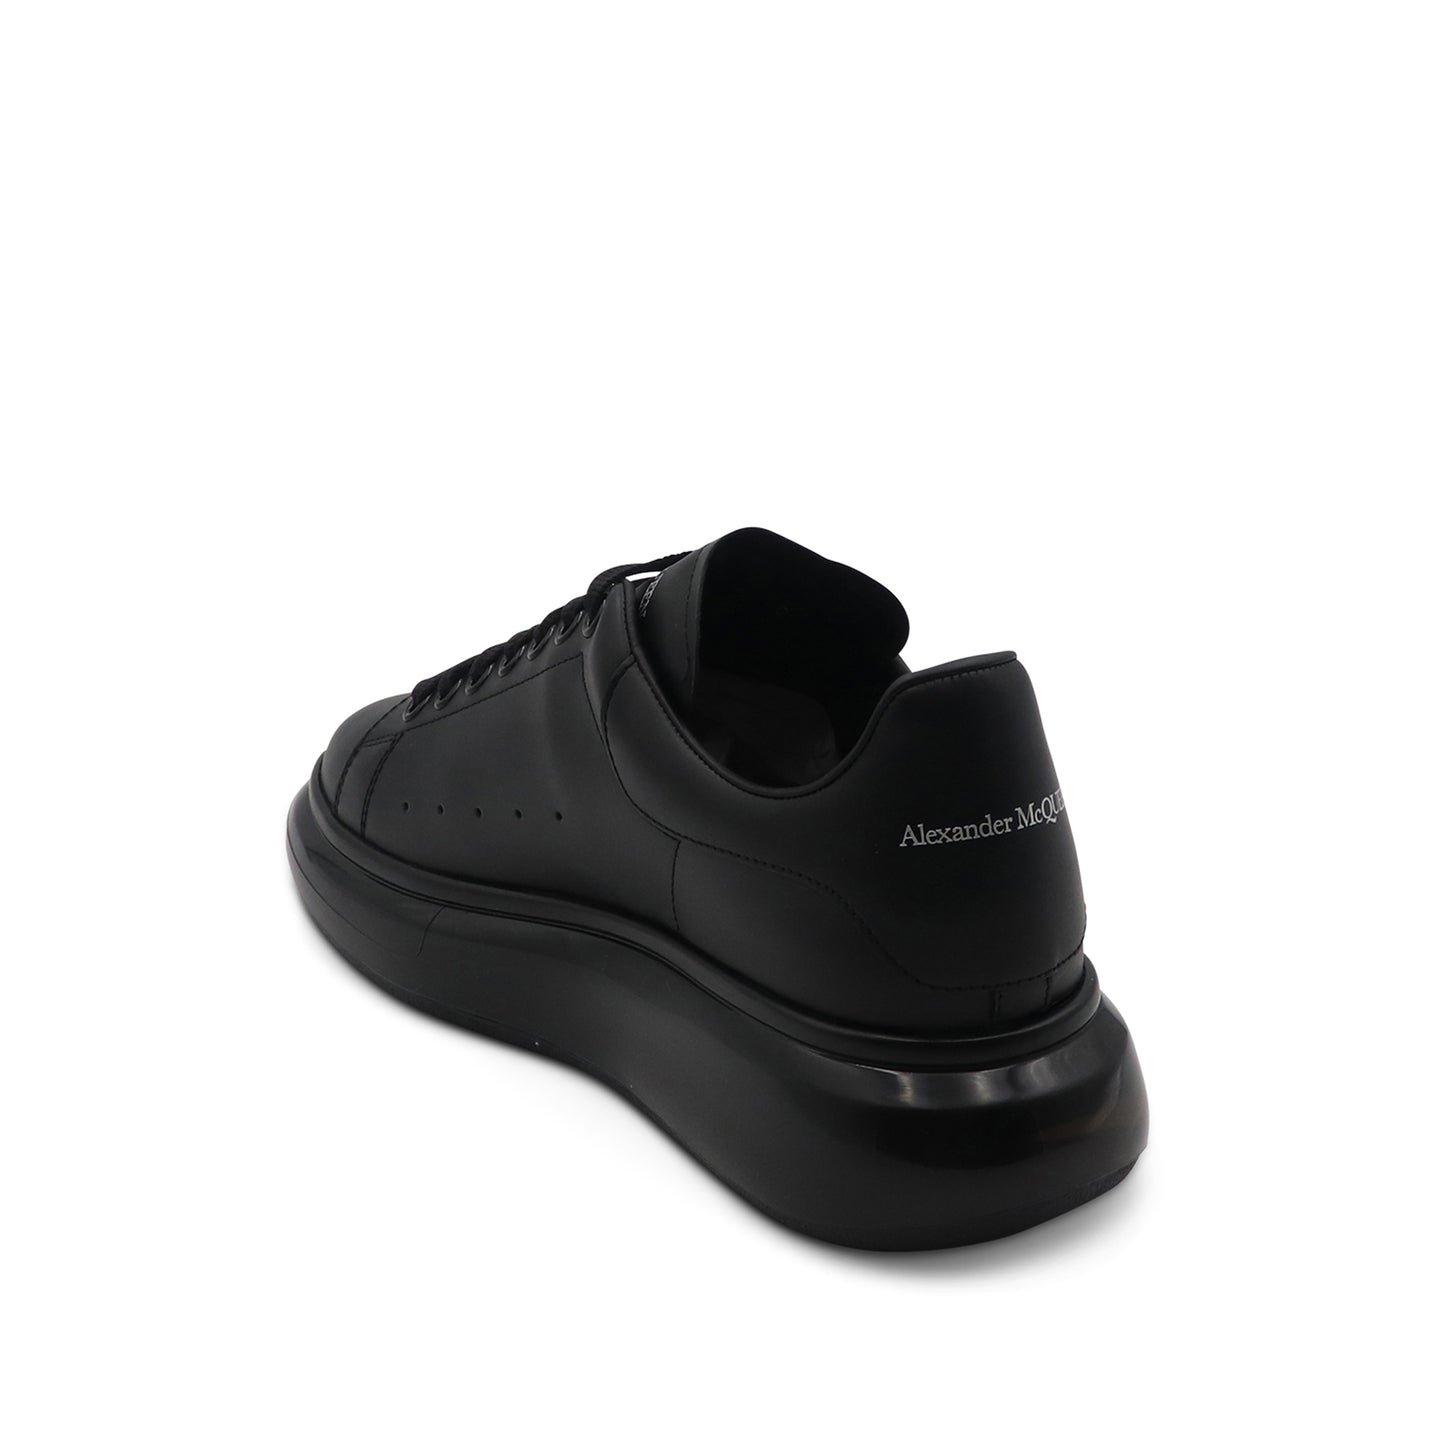 Larry Transparent Sole Sneaker in Black/Black